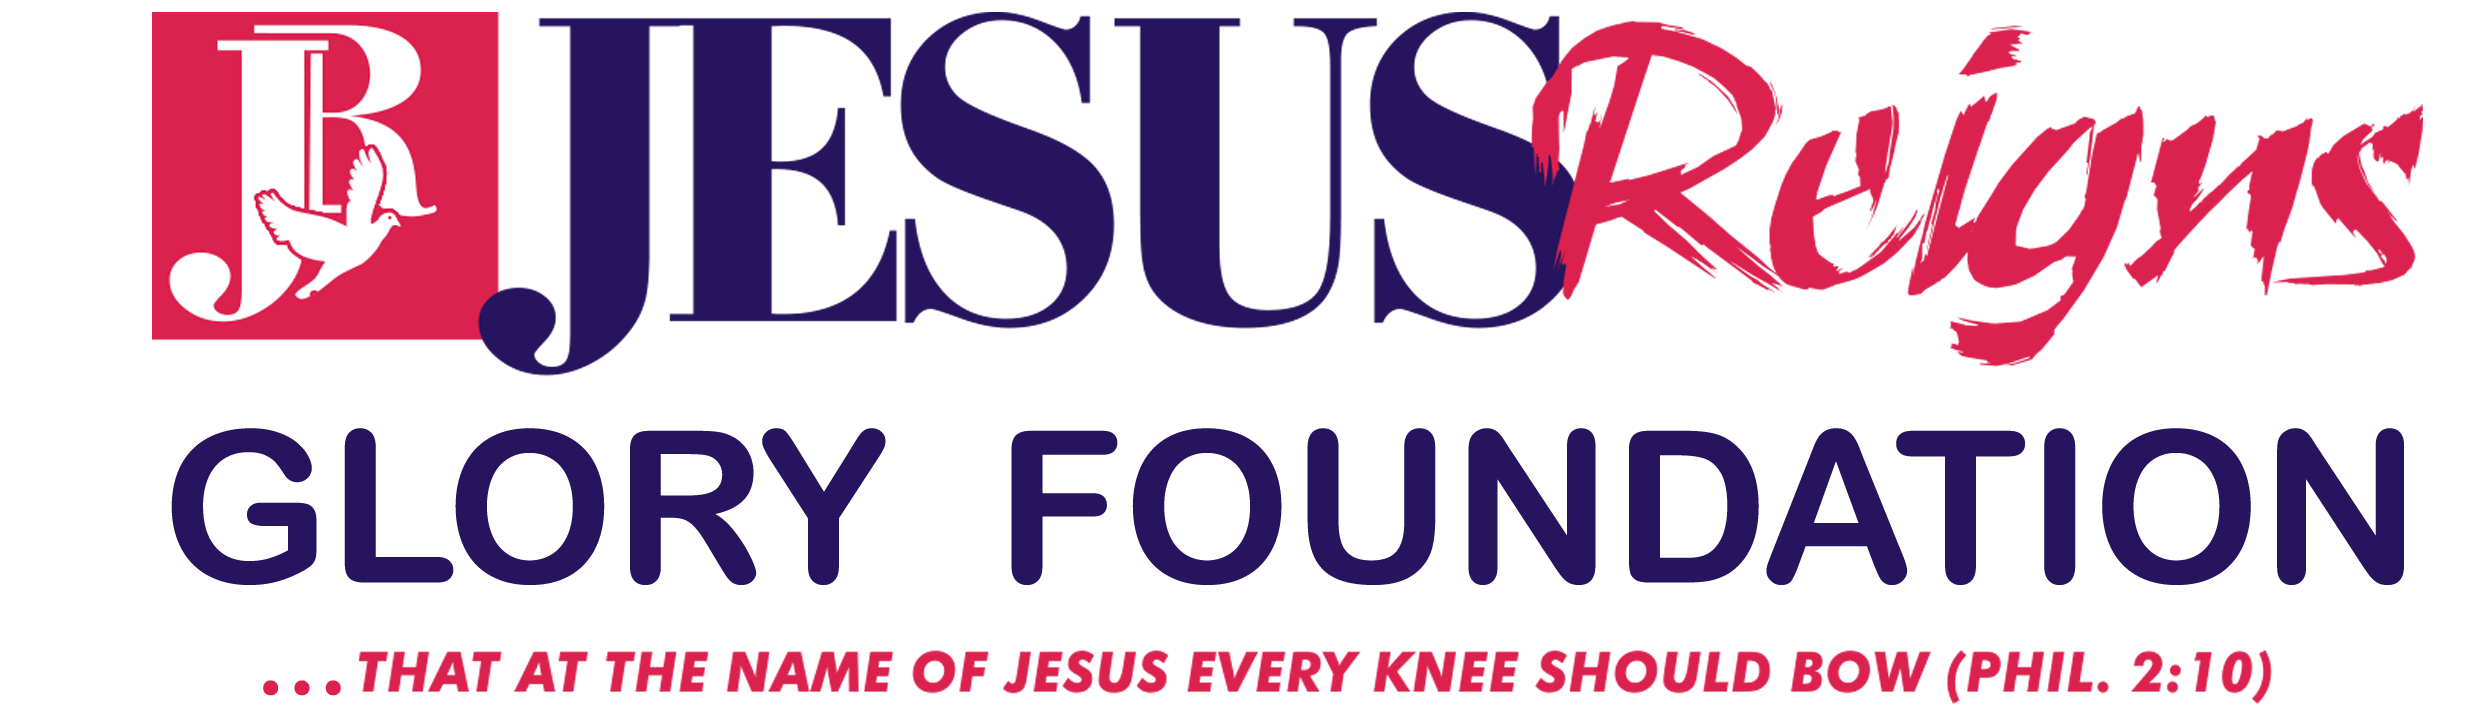 Jesus Reigns Full Logo-1-copy